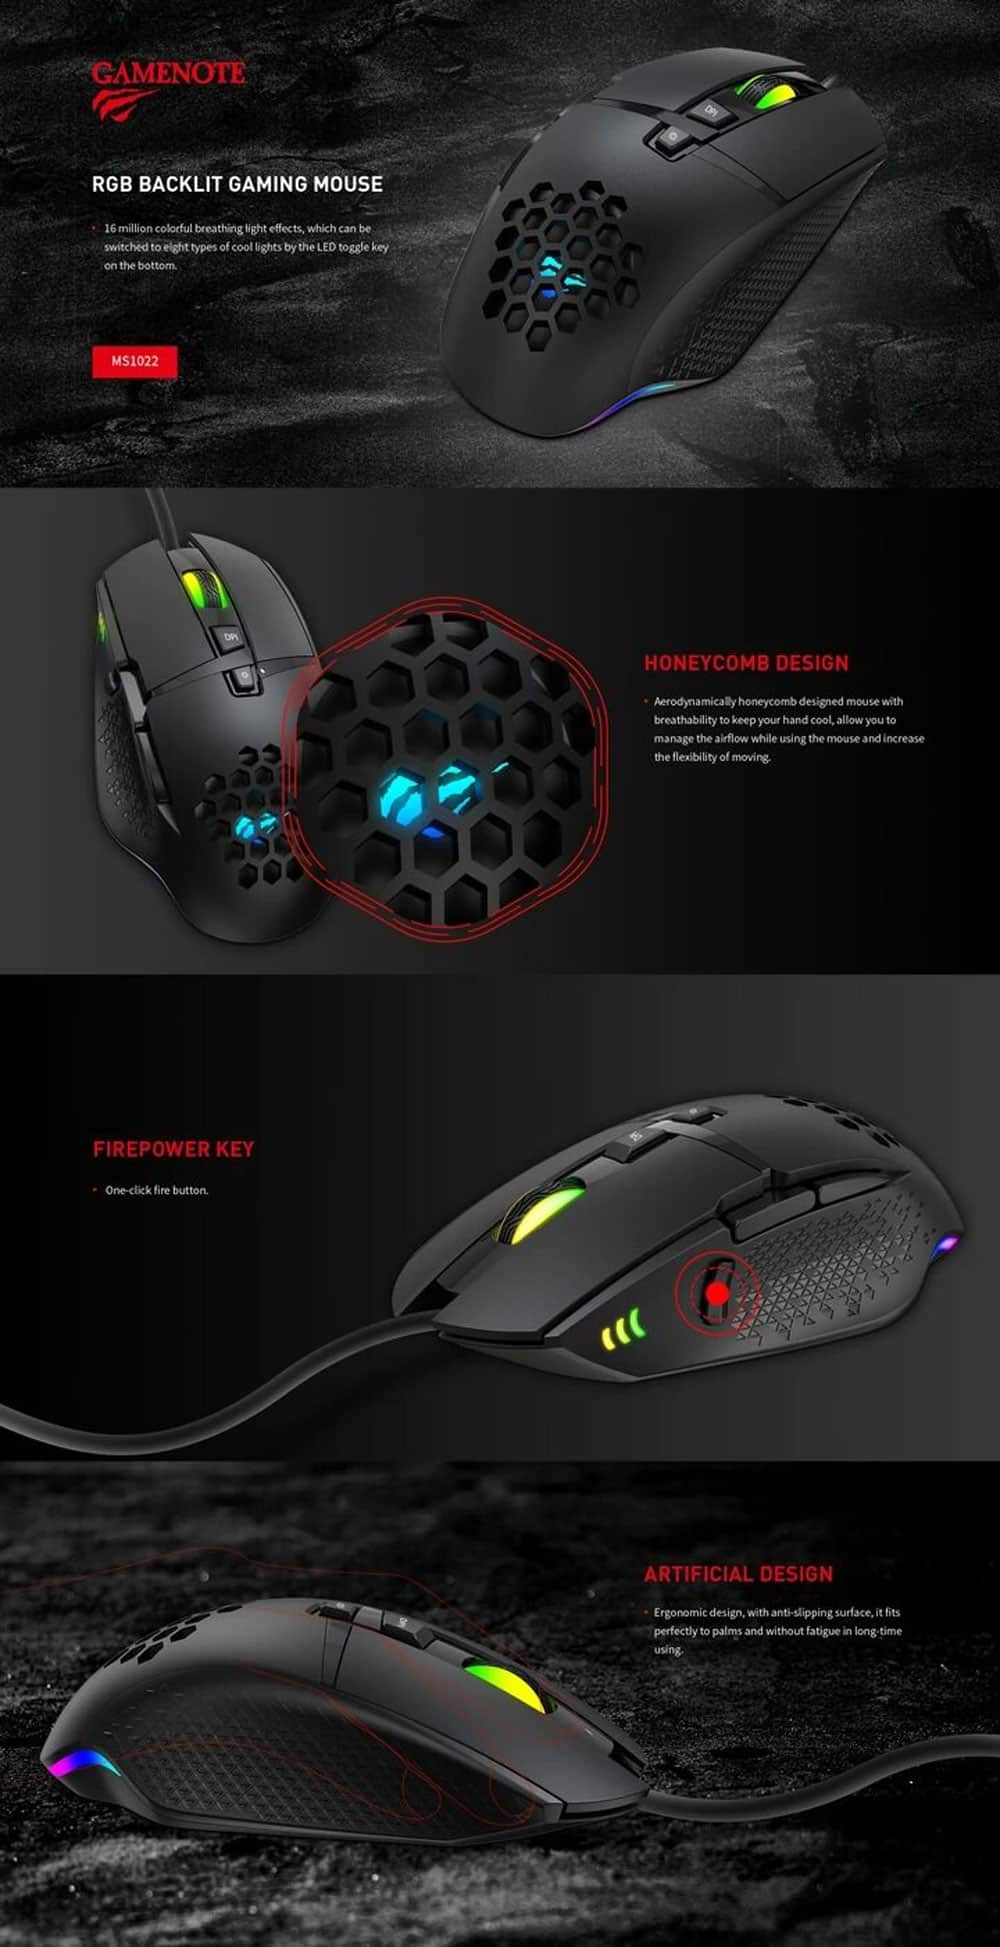 Havit MS1022 RGB Backlit Gaming Mouse 5